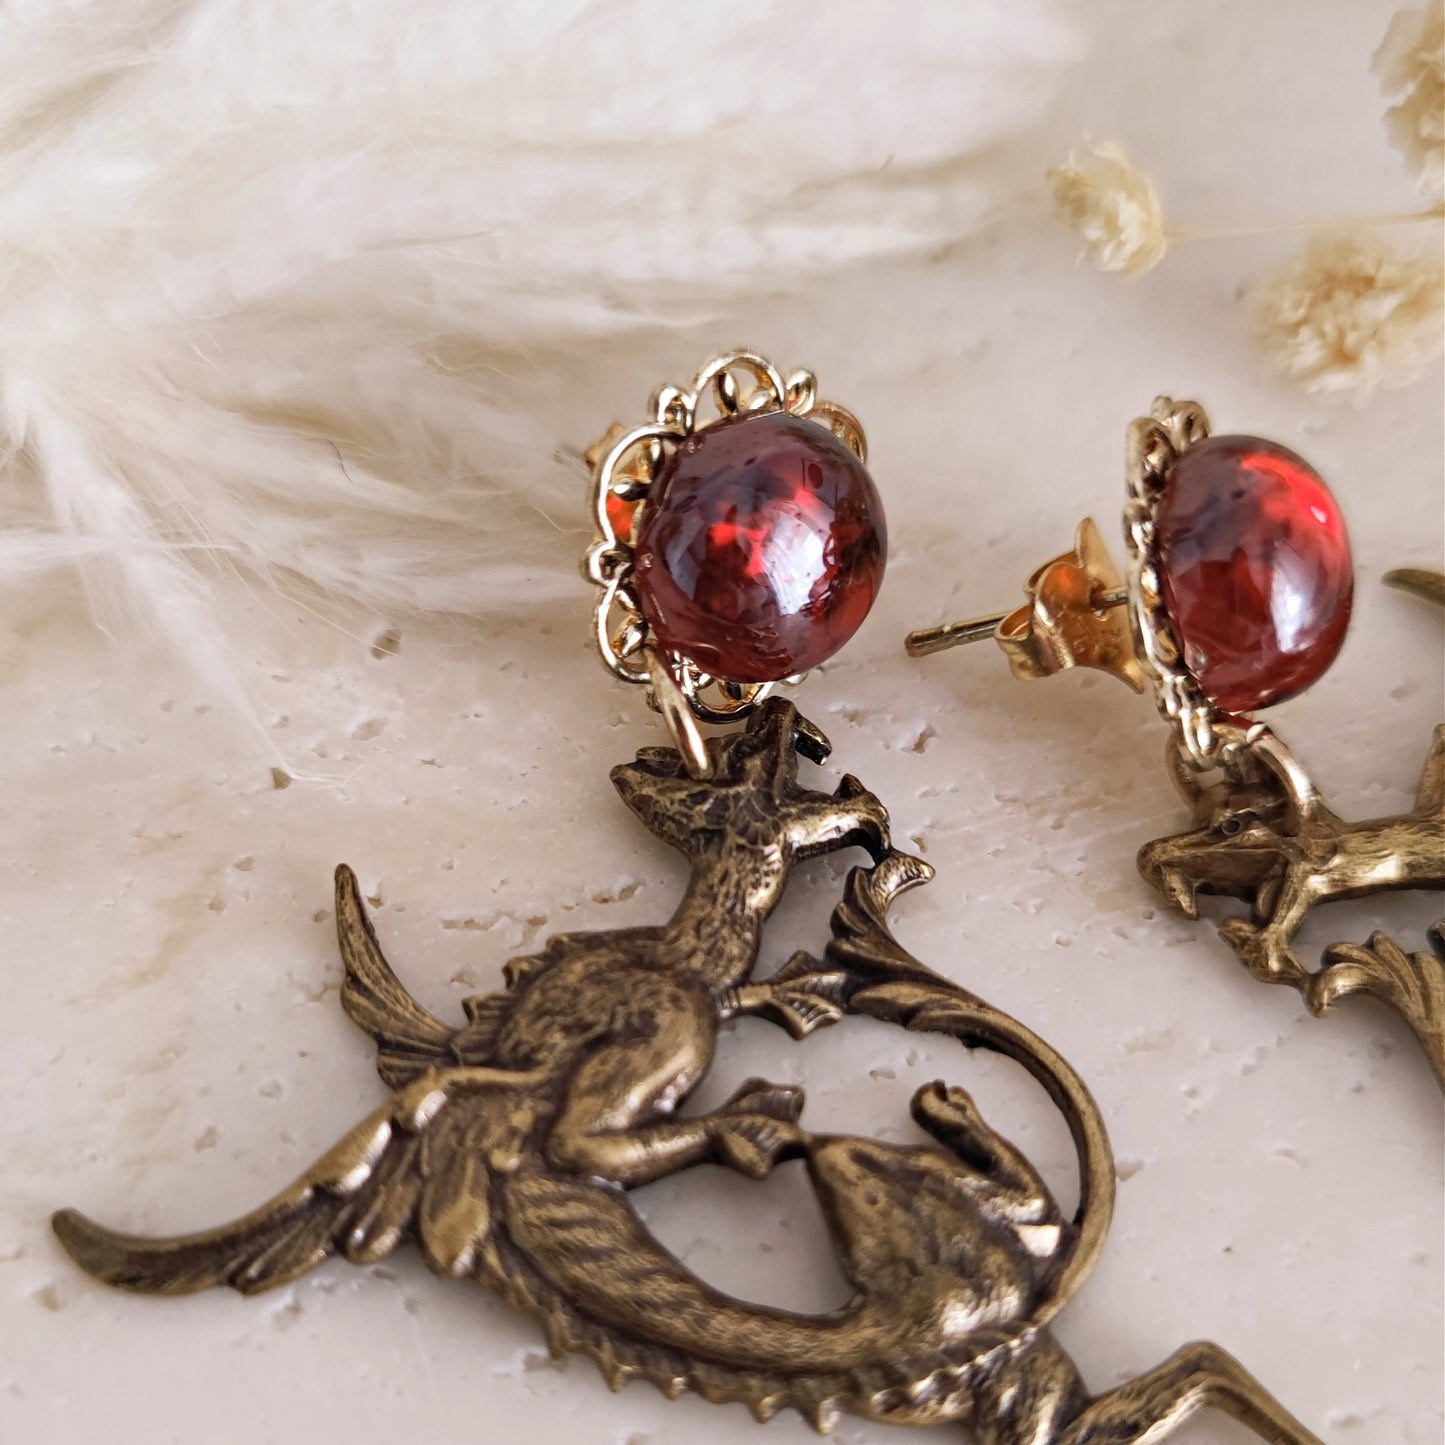 The Tudors Anne Boleyn Inspired Dragon and Ruby Gemstones Earrings